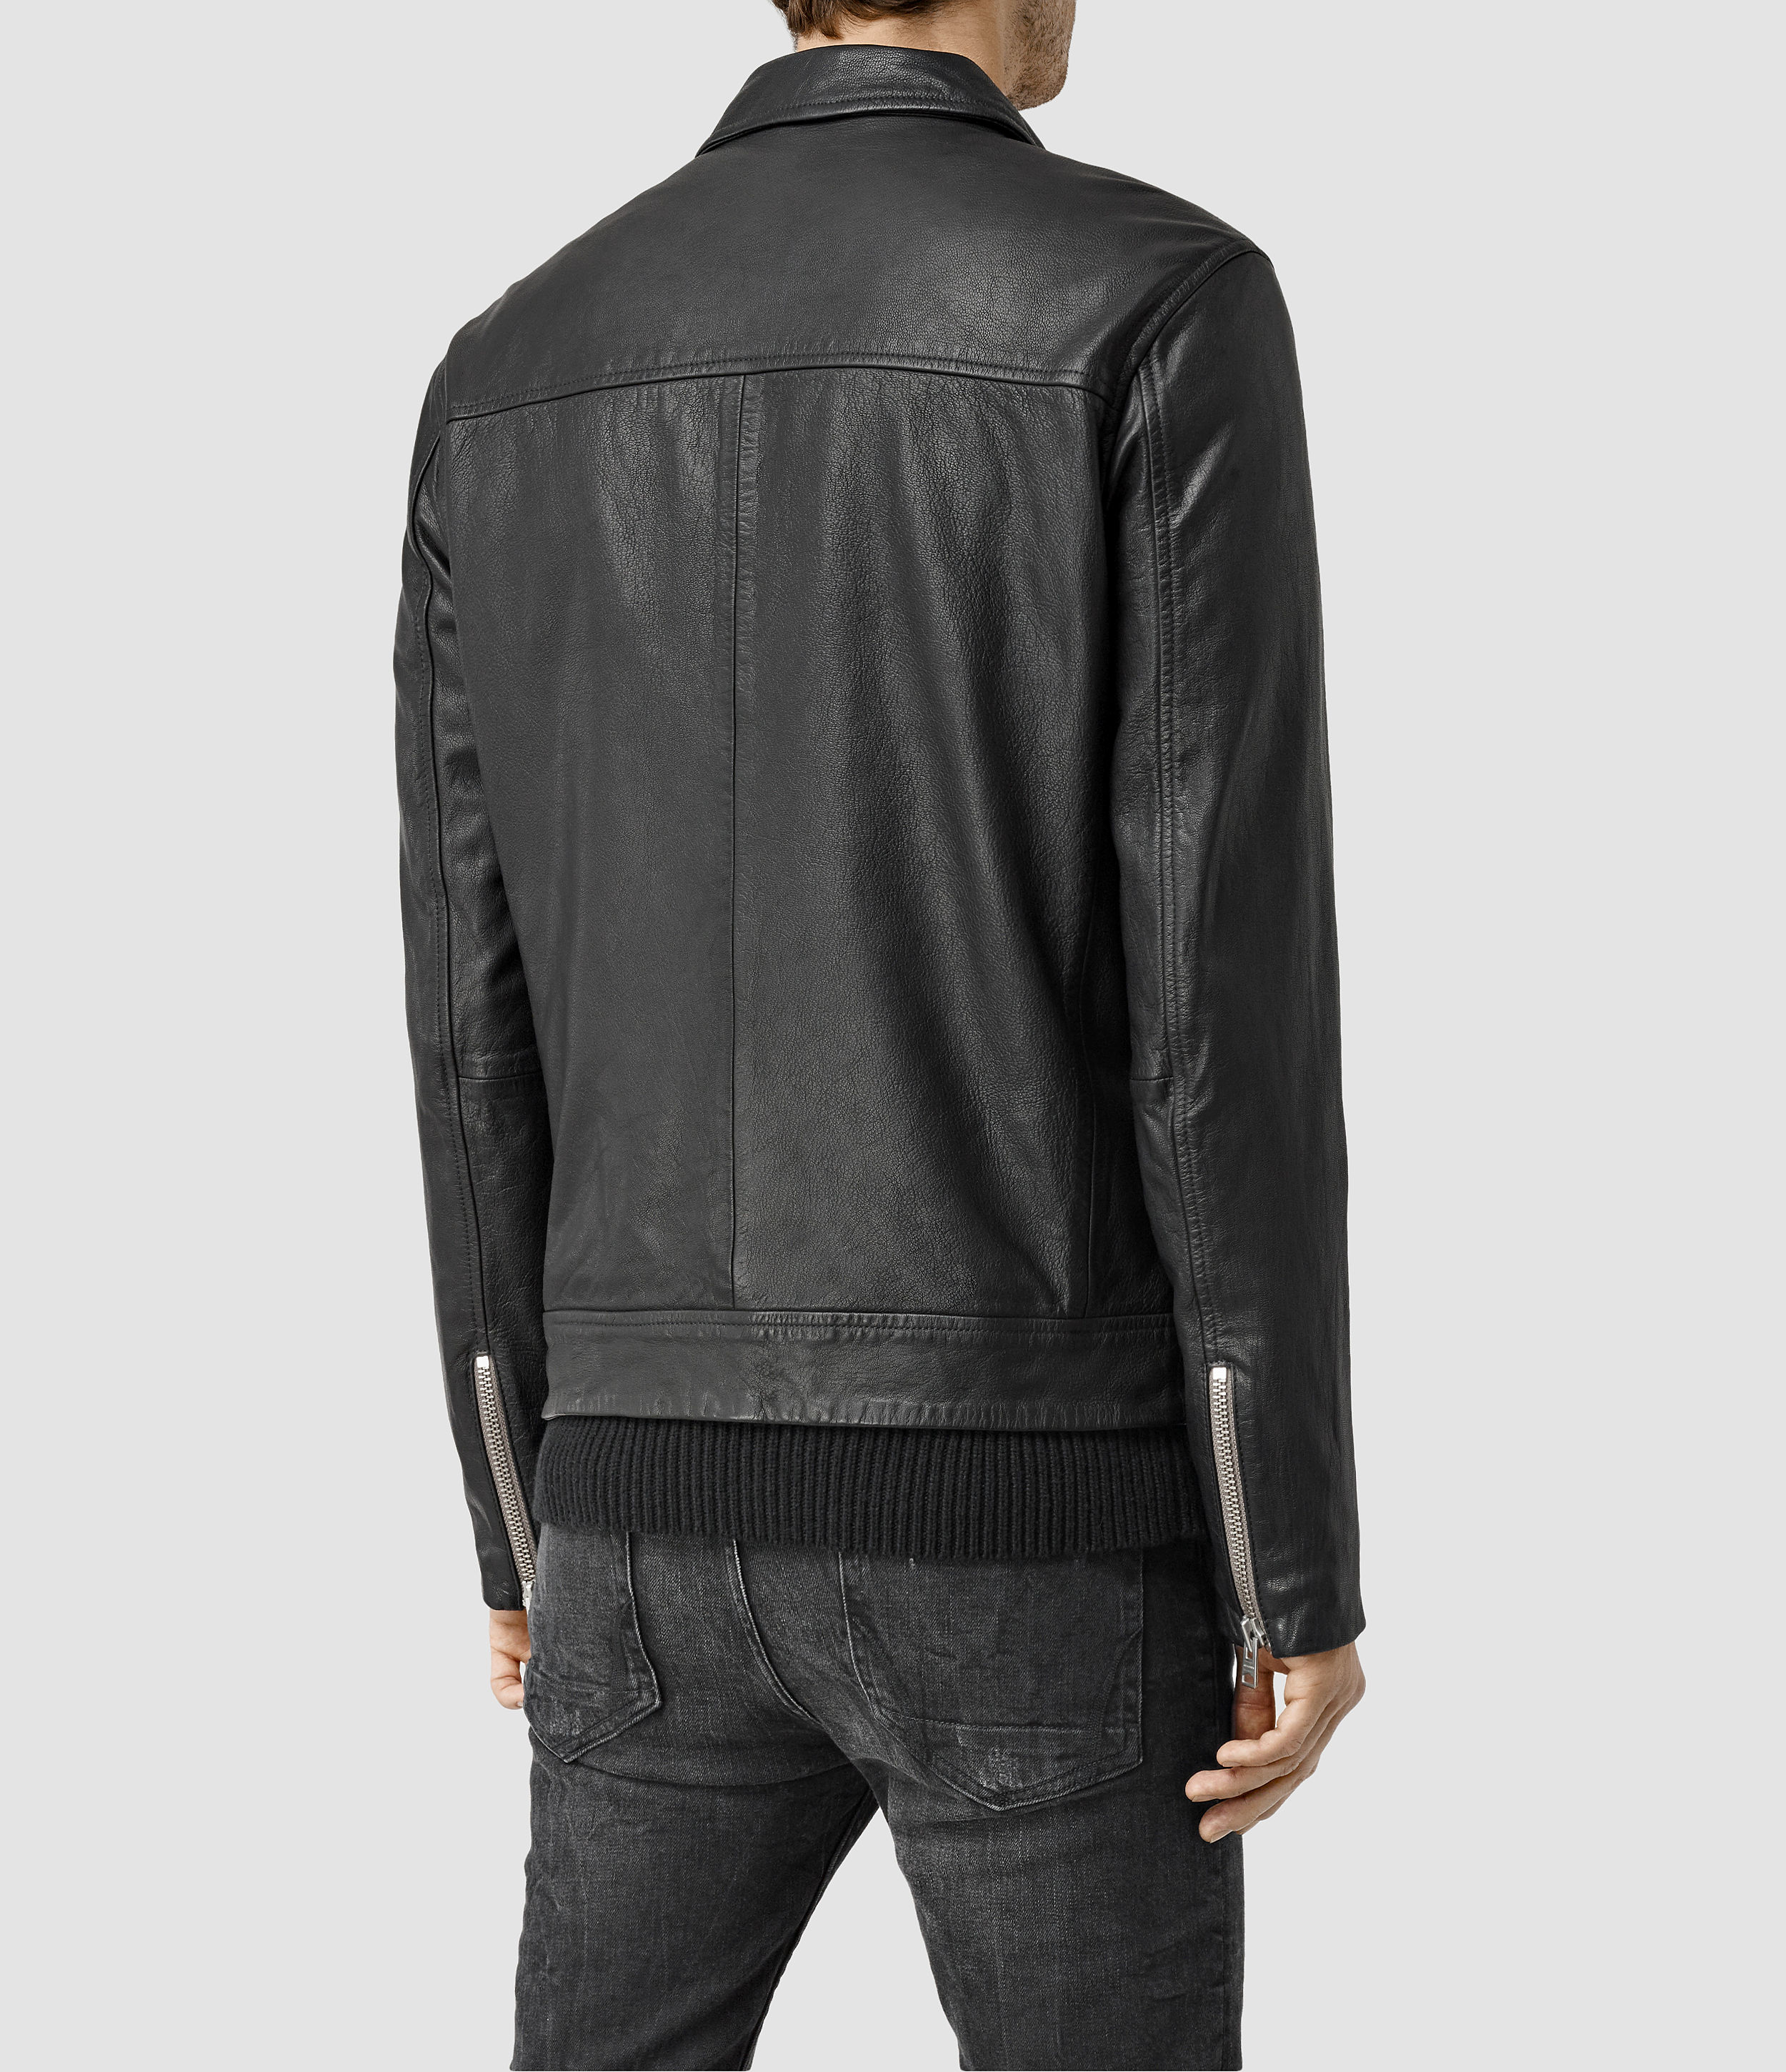 Lyst - Allsaints Belmont Leather Biker Jacket Usa Usa in Black for Men